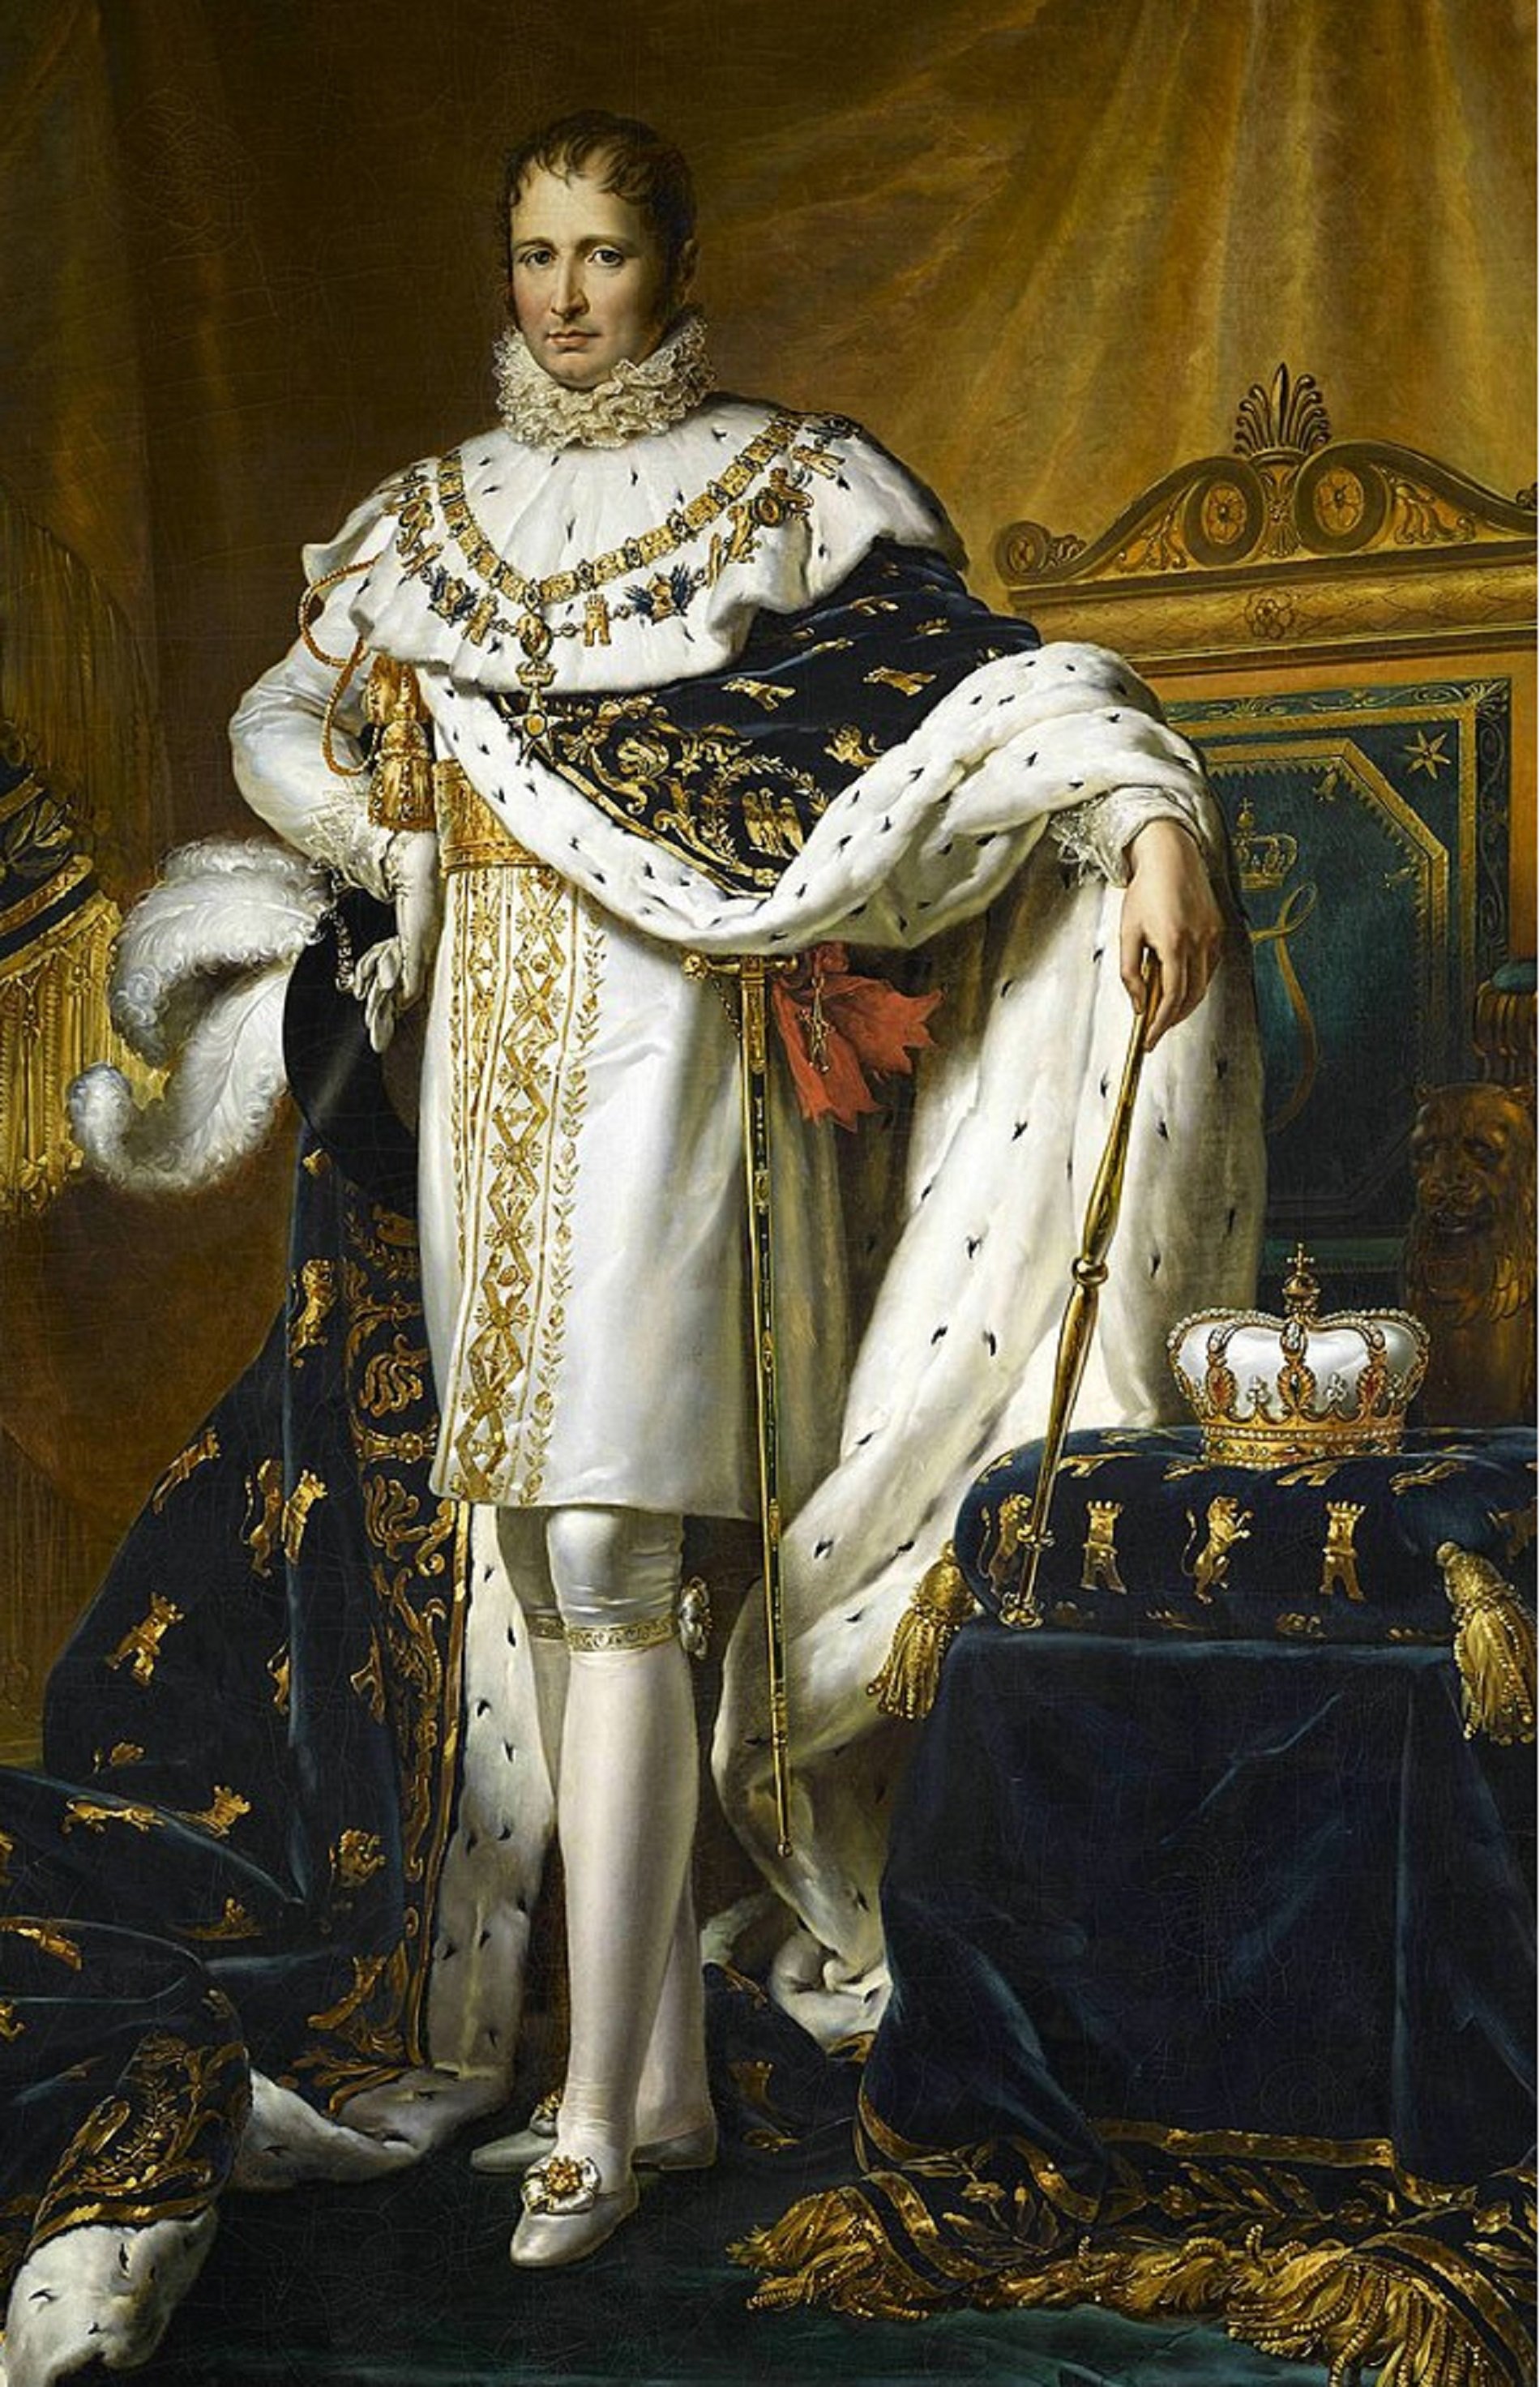 El rei Josep I abandona el tron espanyol